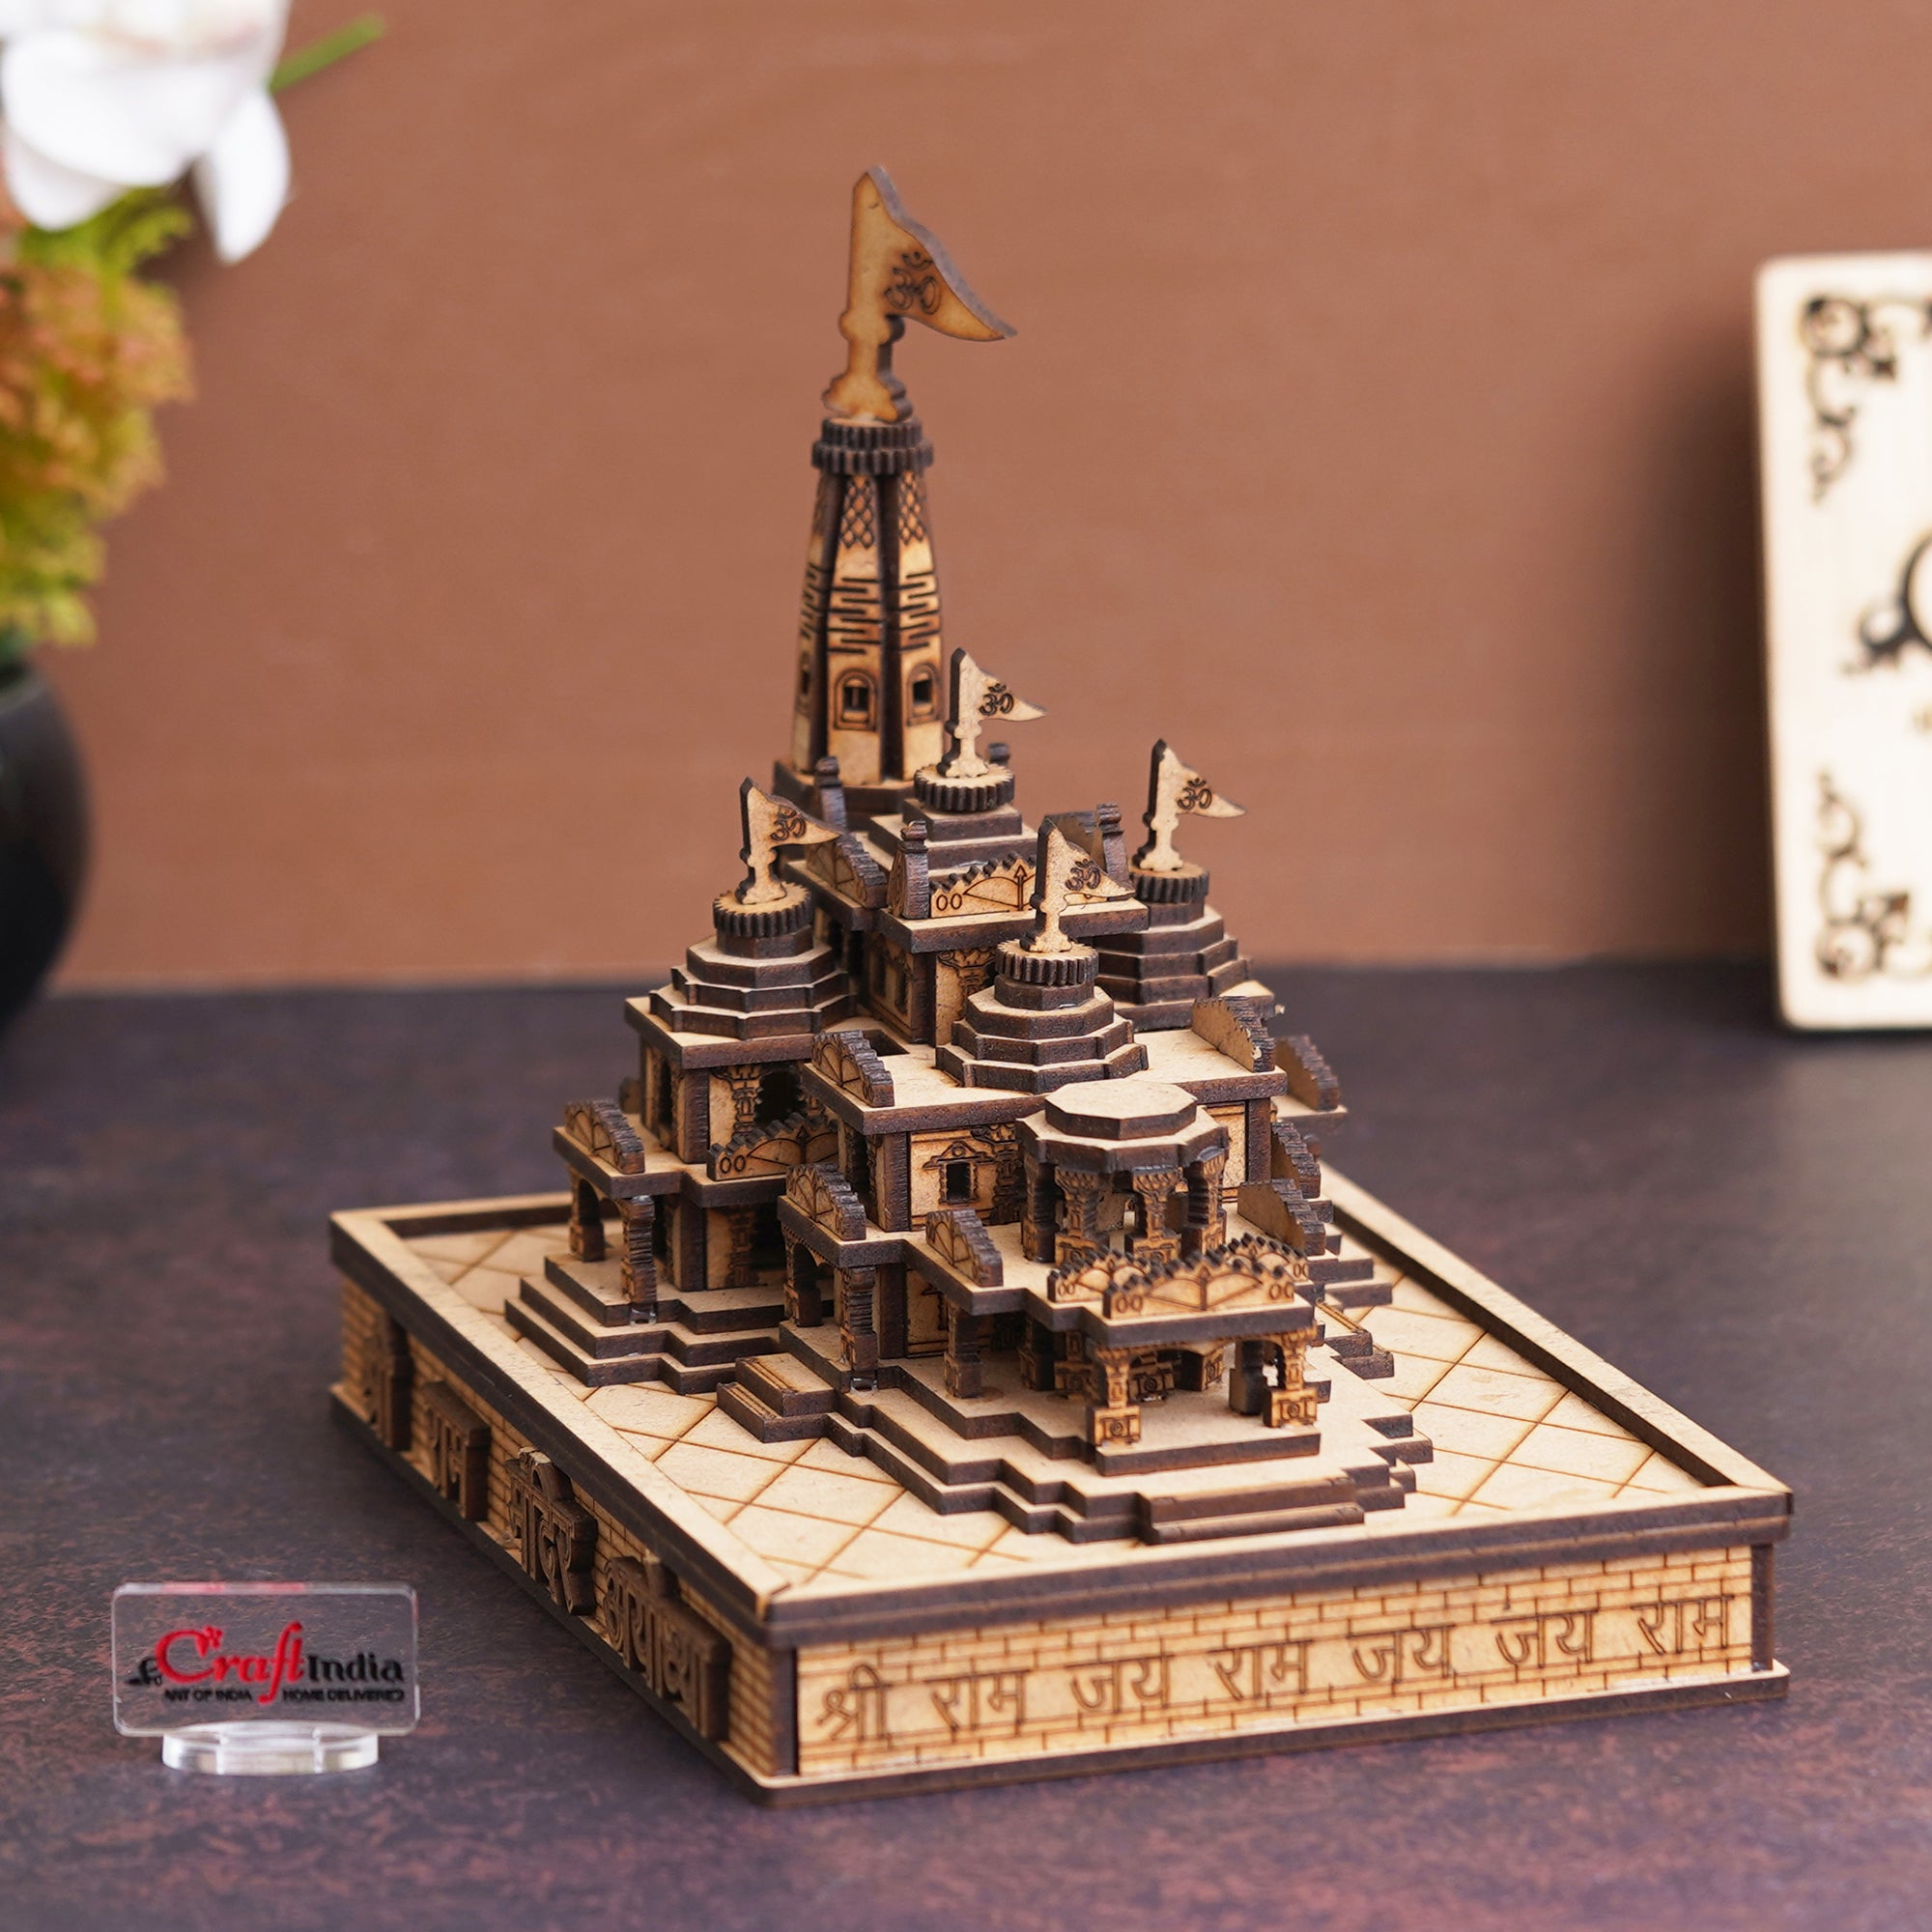 eCraftIndia Shri Ram Mandir Ayodhya Model - Wooden MDF Craftsmanship Authentic Designer Temple - Ideal for Home Temple, Decor, and Spiritual Gifting (Beige, Brown) 5